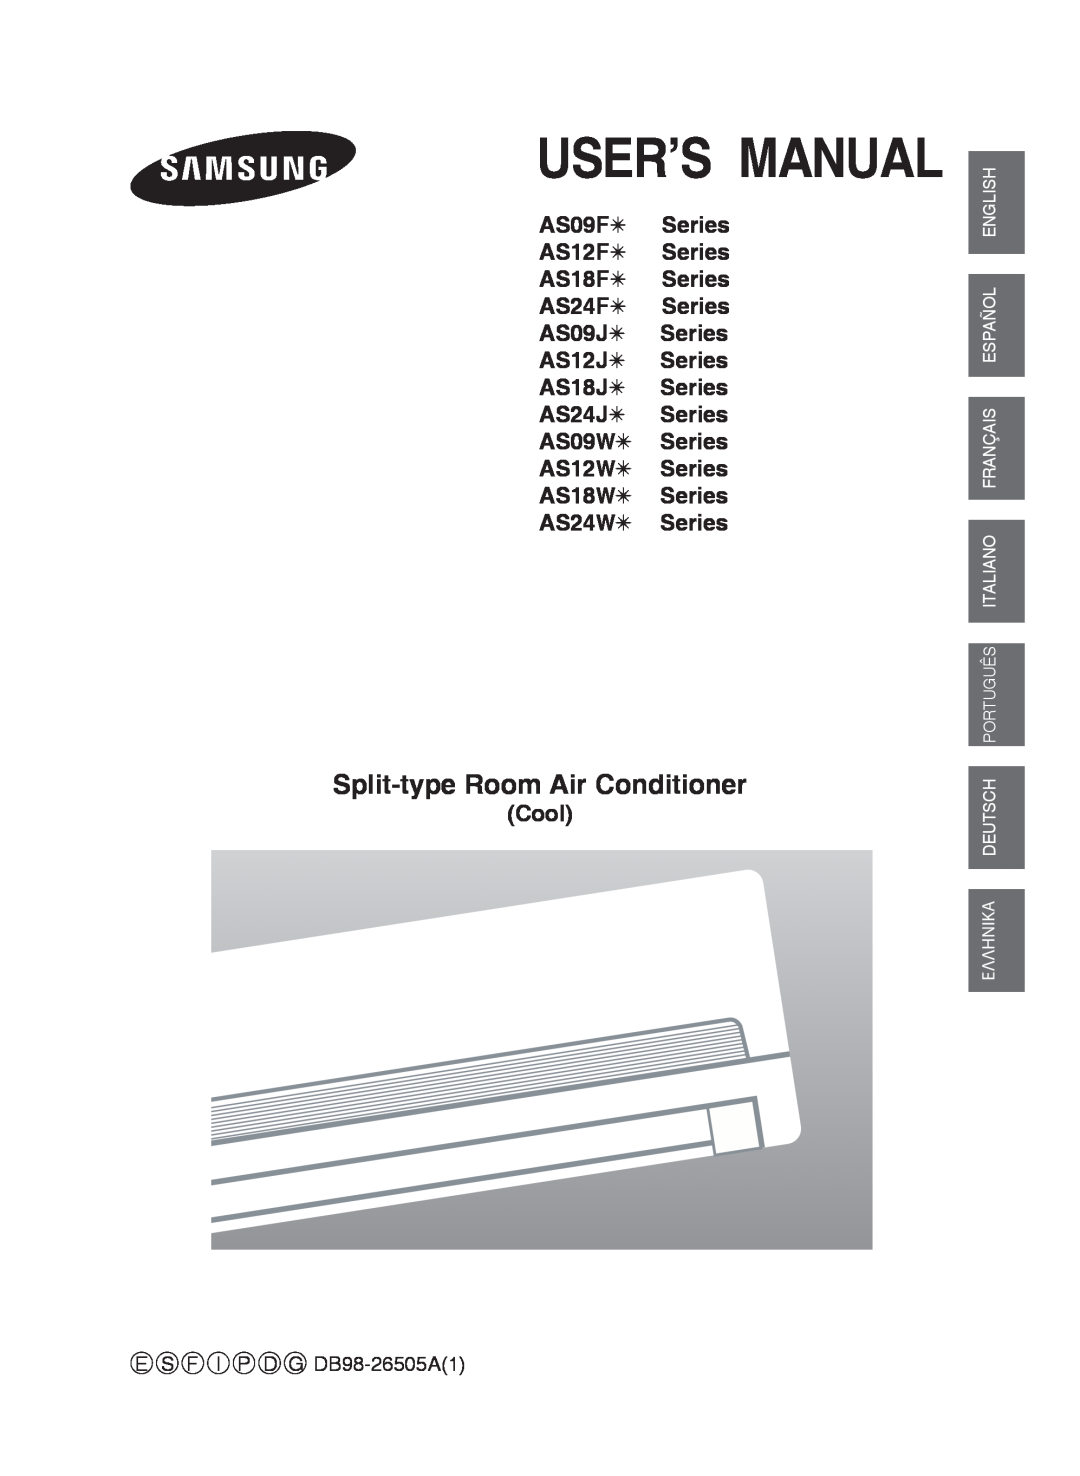 Samsung AS24J, AS24W, AS24F user manual Split-typeRoom Air Conditioner, AS09F Series AS12F Series AS18F Series, Cool 